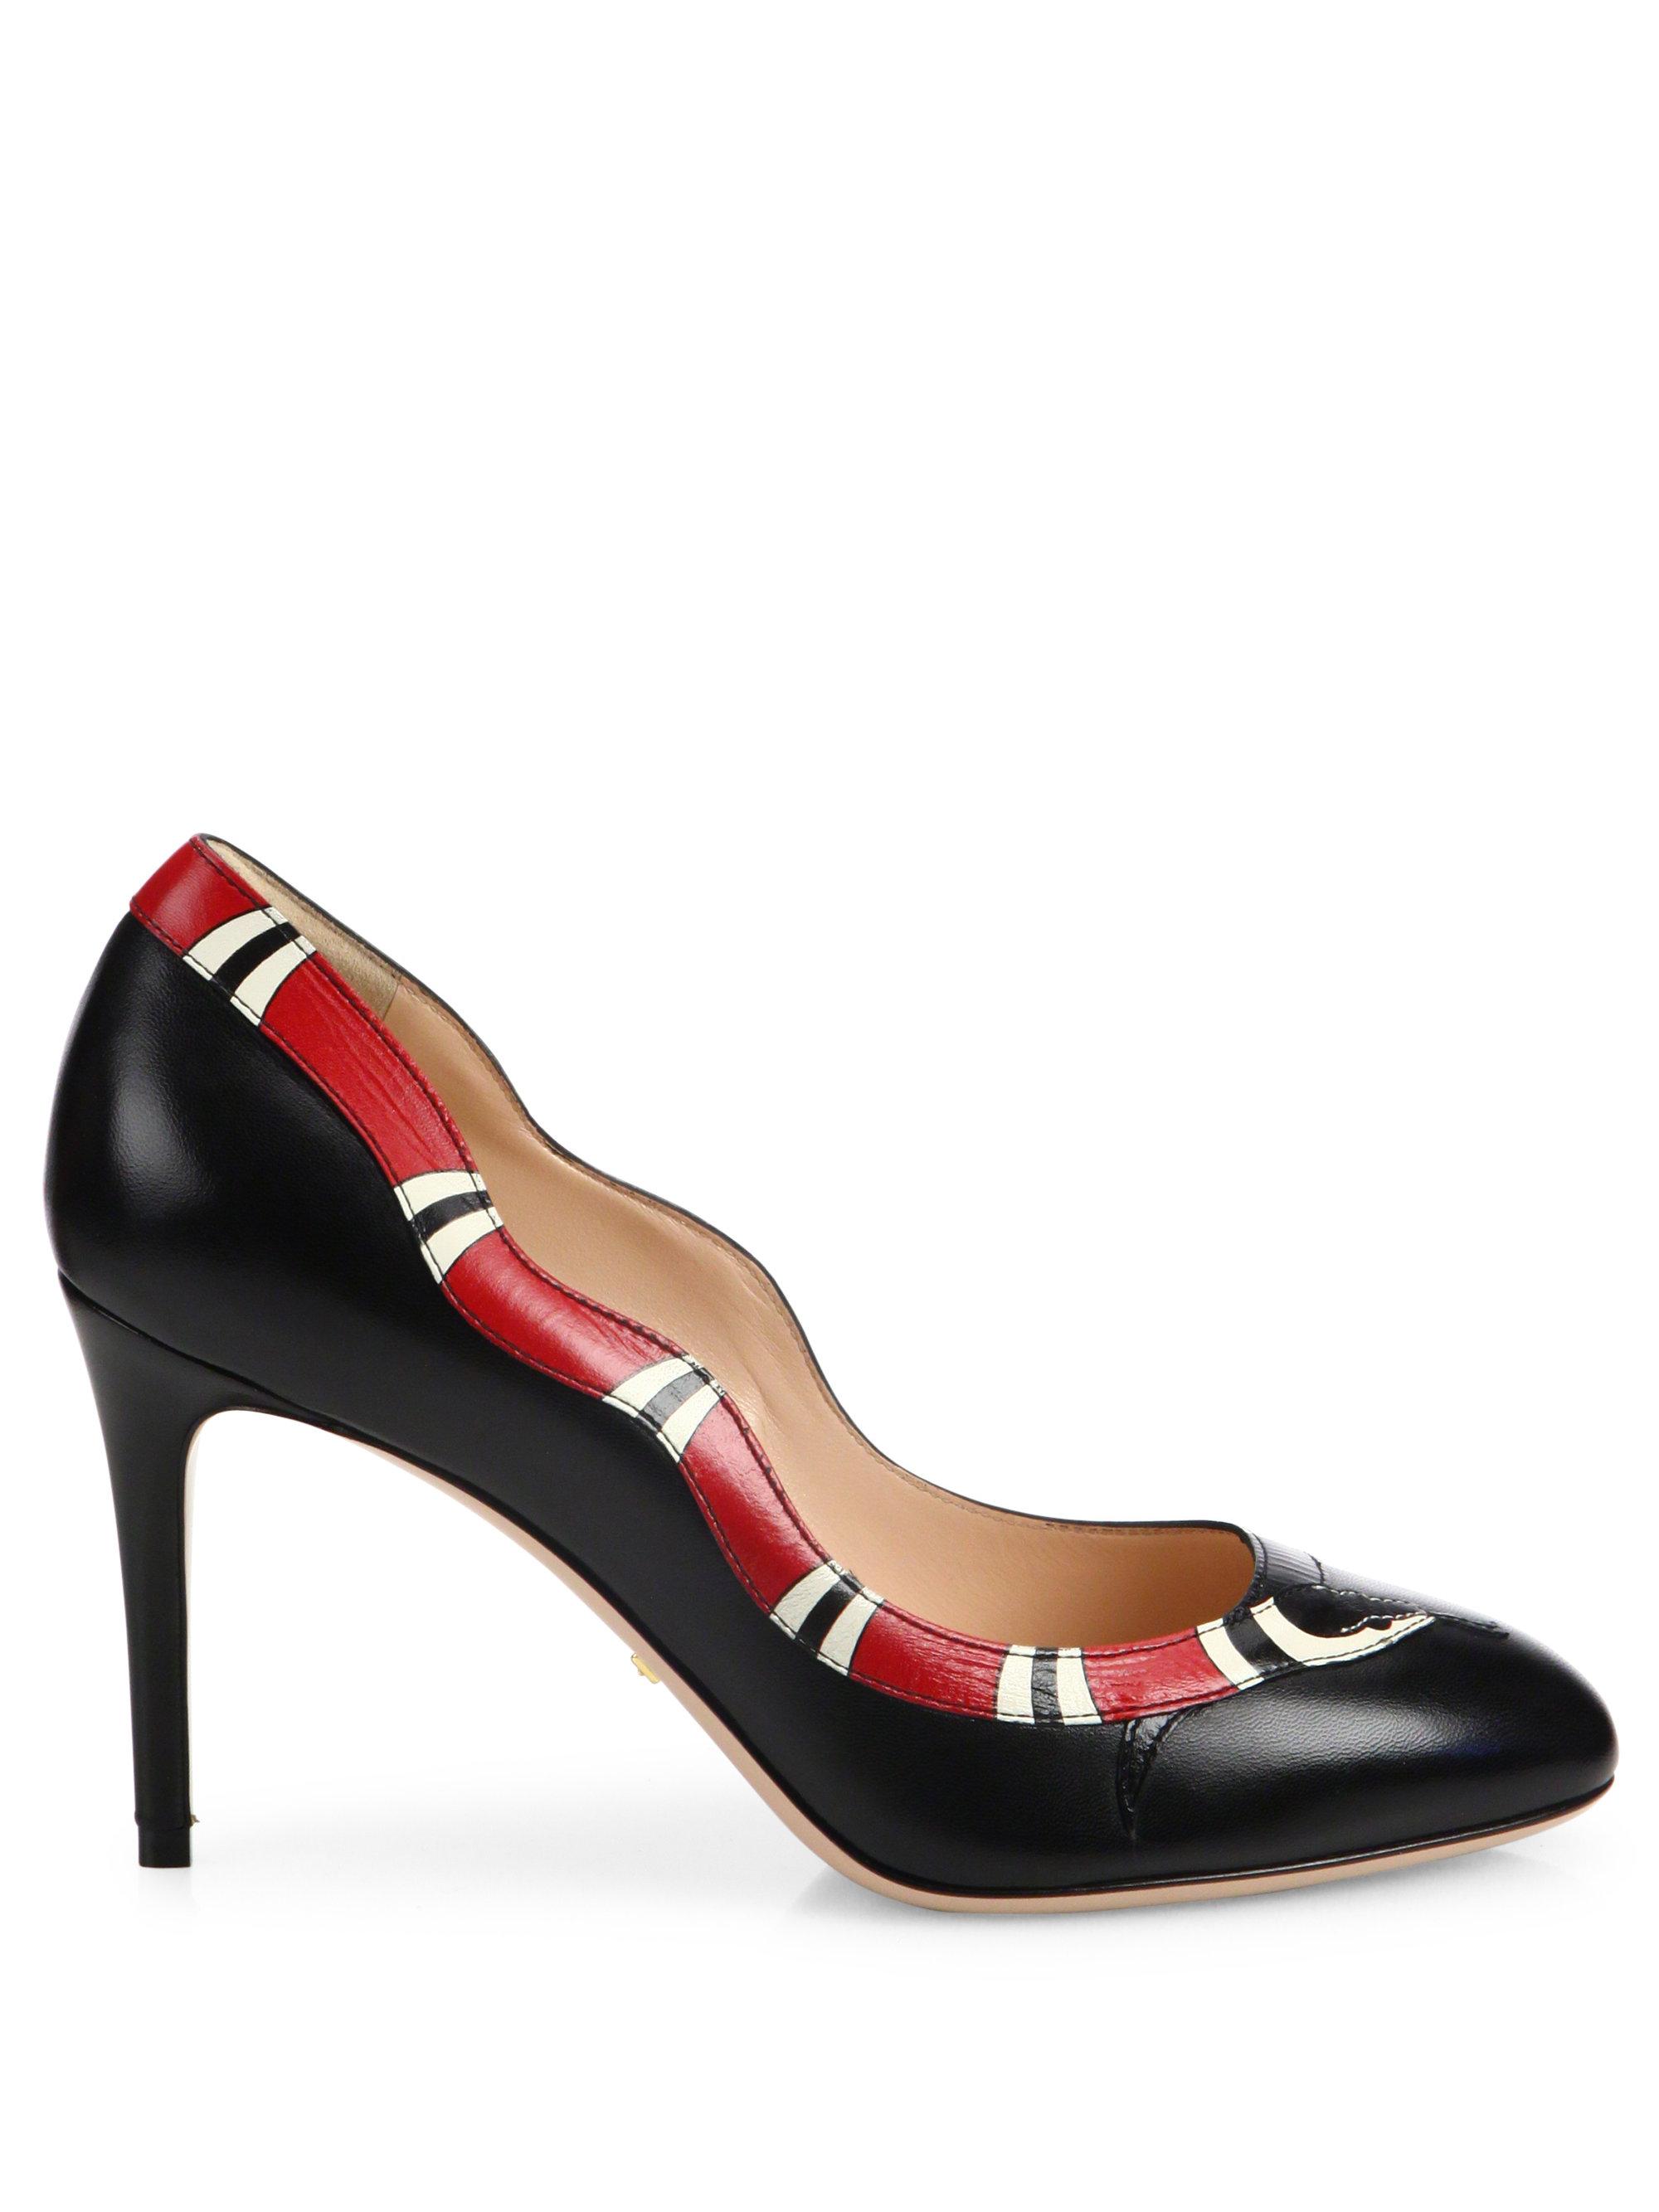 gucci snake heels, OFF 71%,Buy!